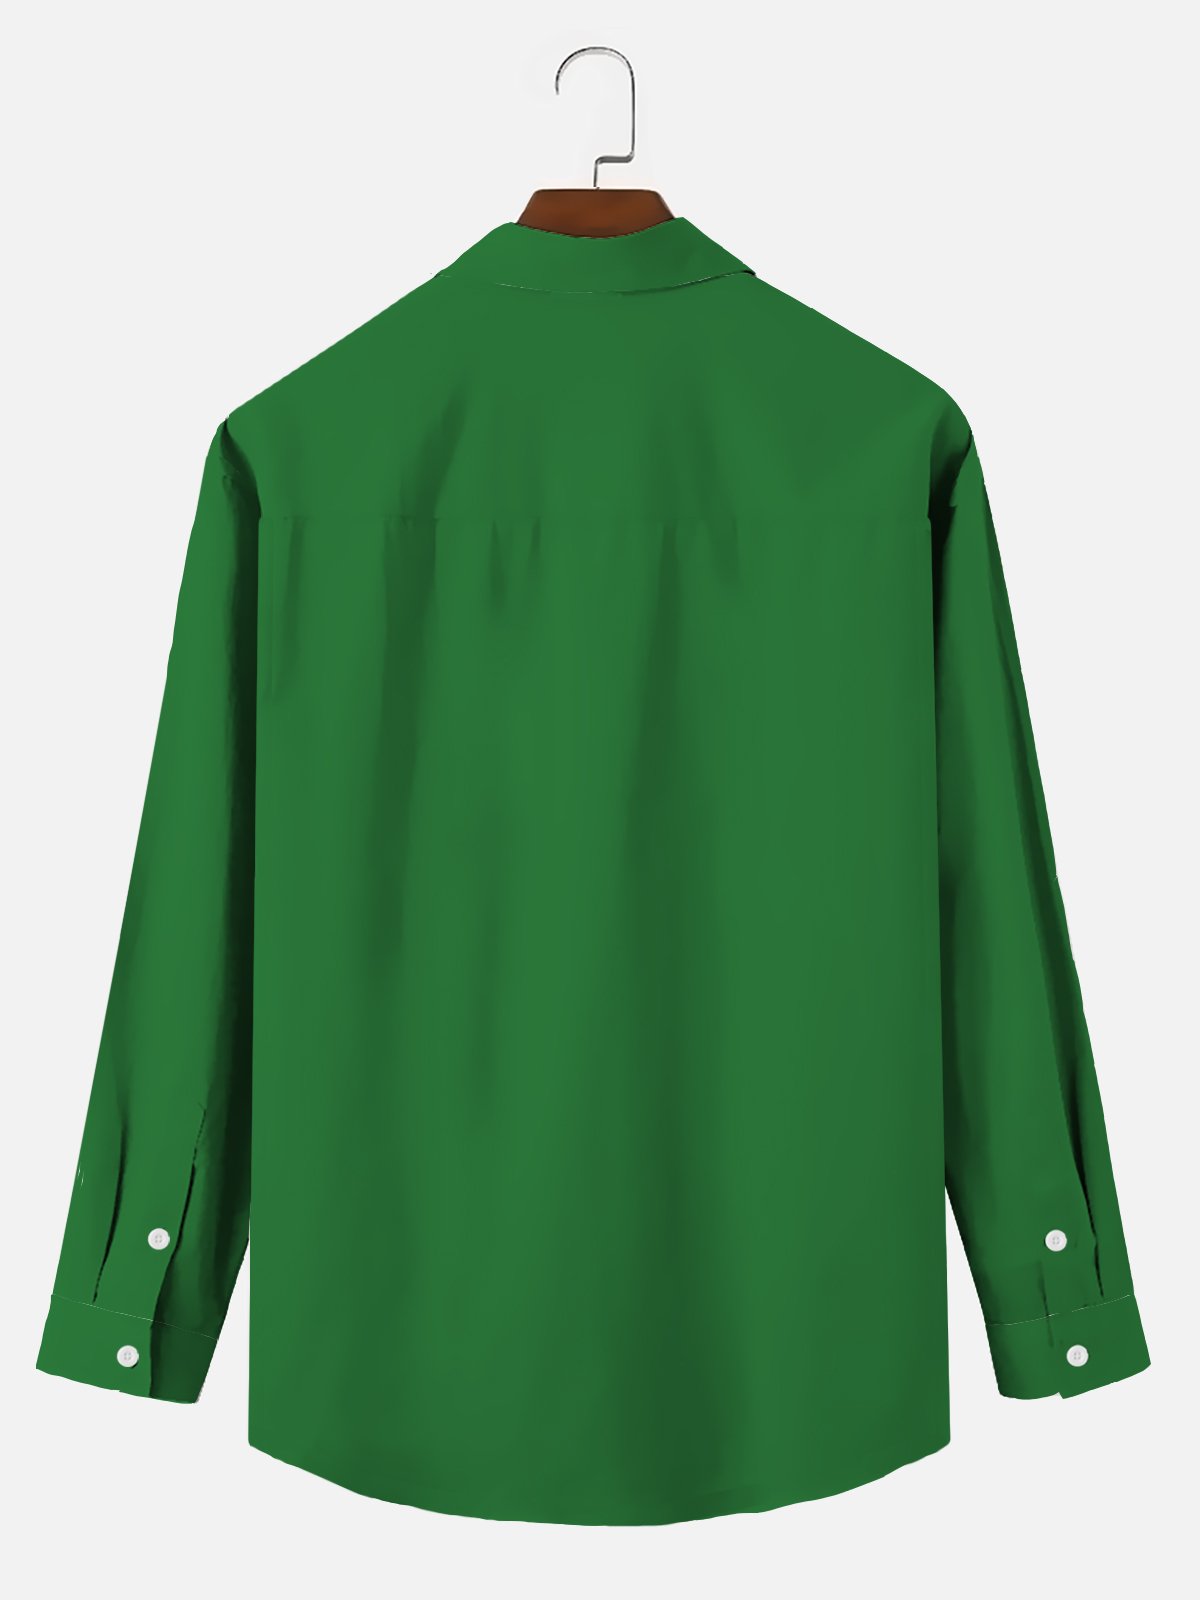 Royaura 1950s St. Patrick Men's Long Sleeve Bowling Shirts Clover Stripes Cartoon Character Oversized Button Down Shirts